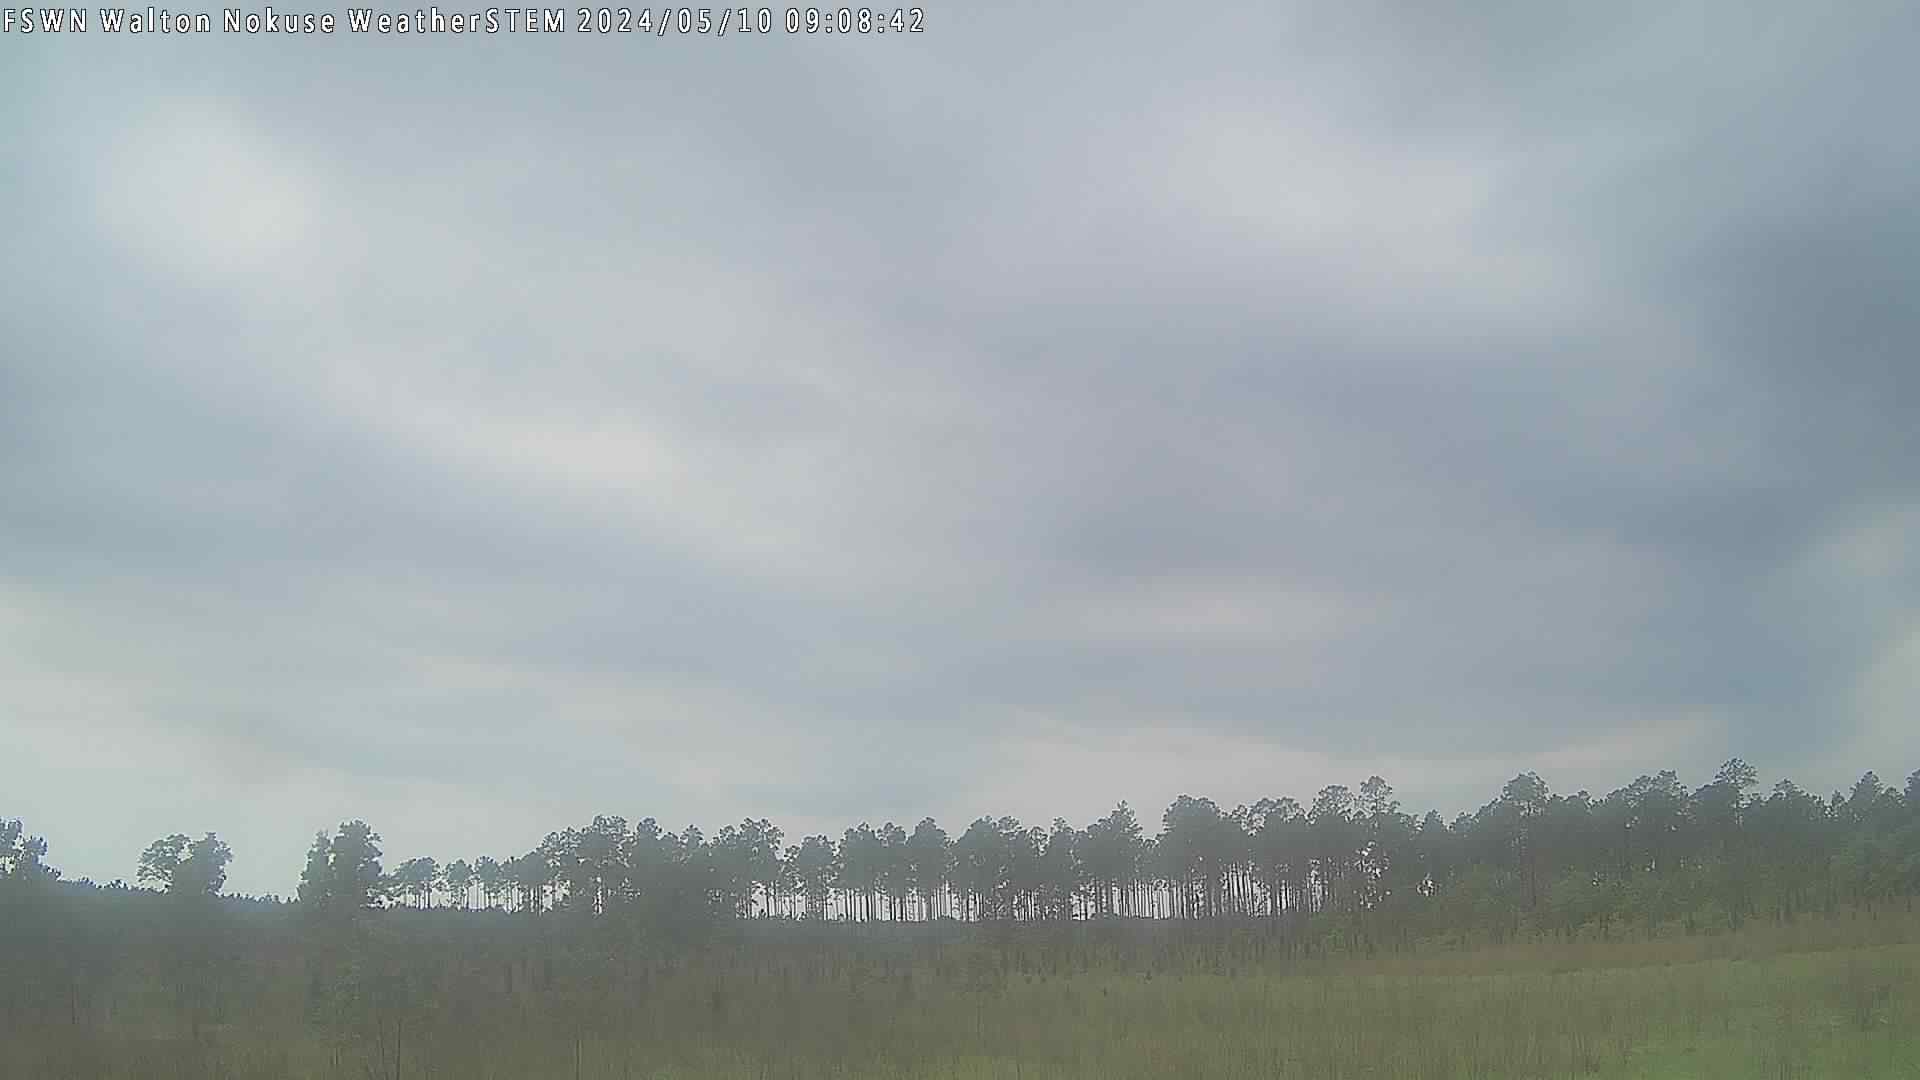  WeatherSTEM Cloud Camera FSWN_Nokuse in Walton County, Florida FL at FSWN Walton County Nokuse Plantation